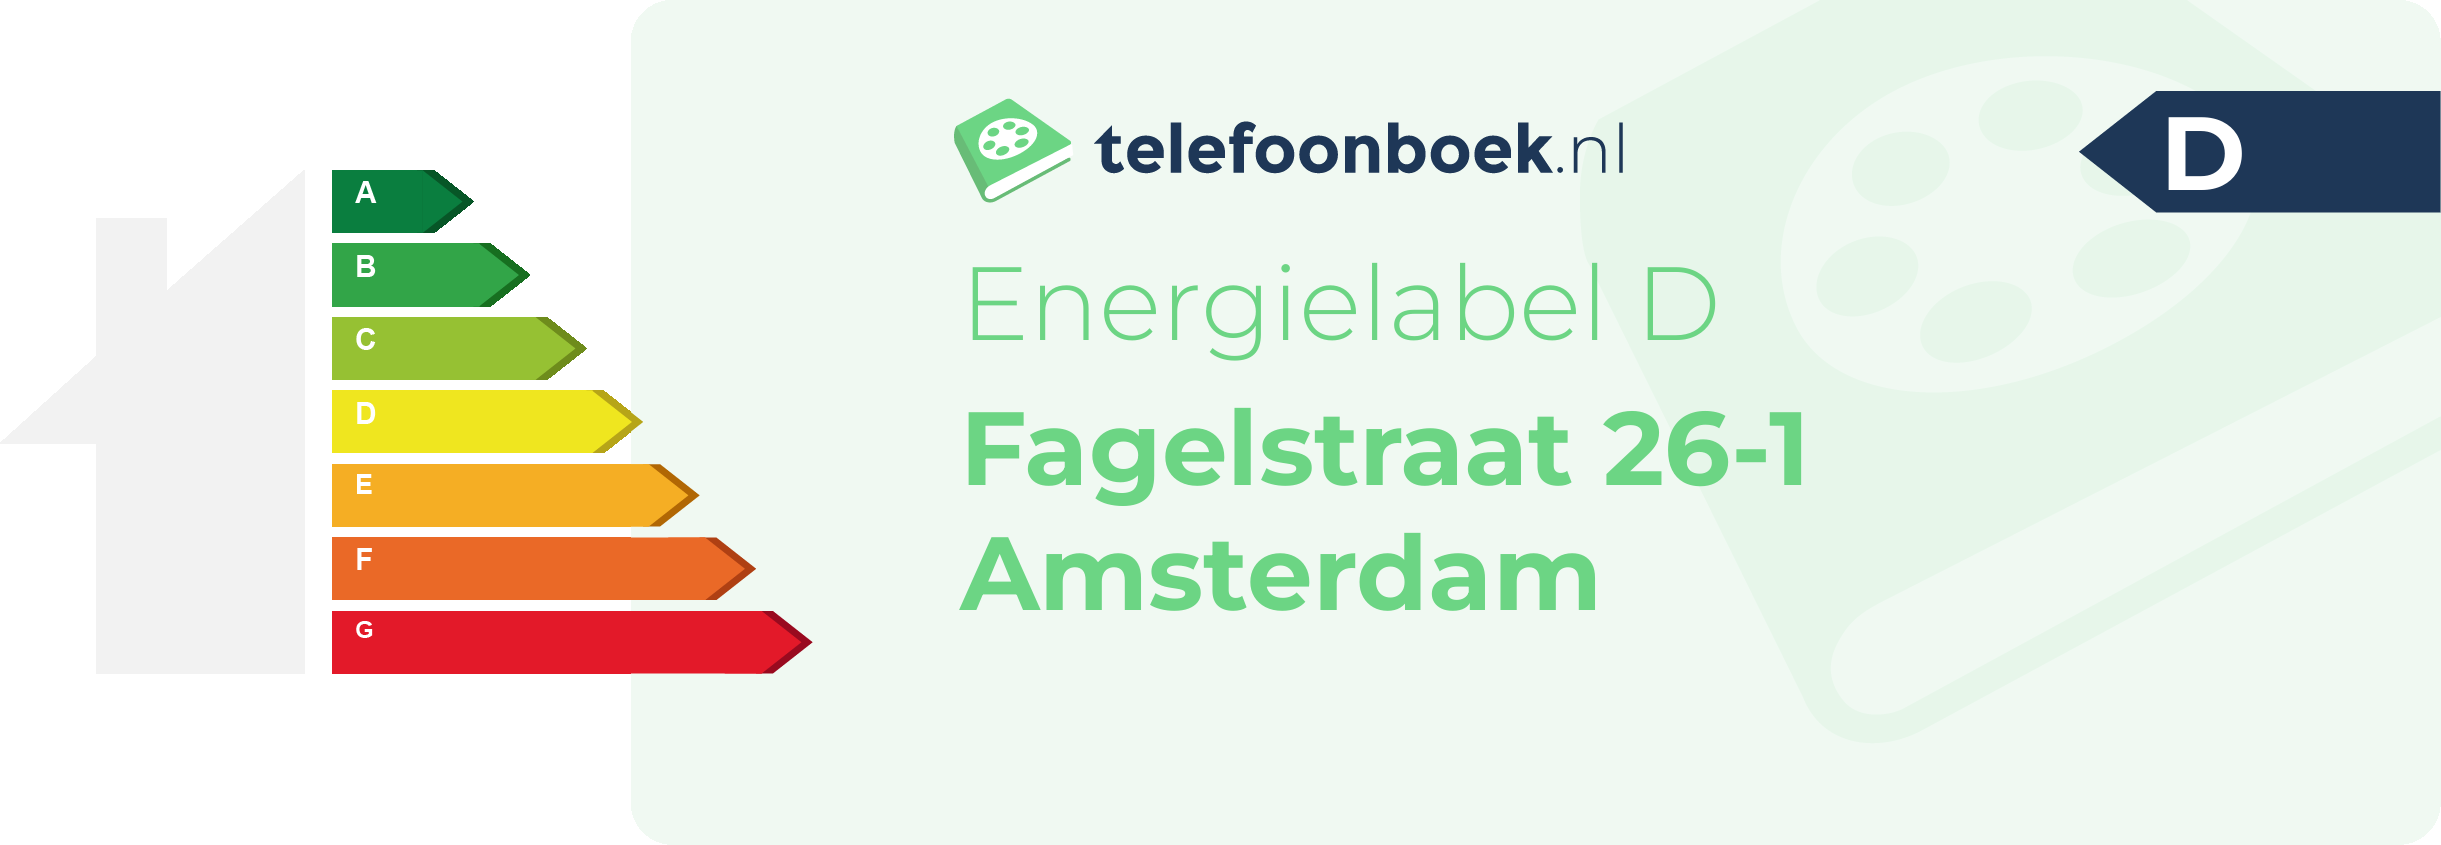 Energielabel Fagelstraat 26-1 Amsterdam